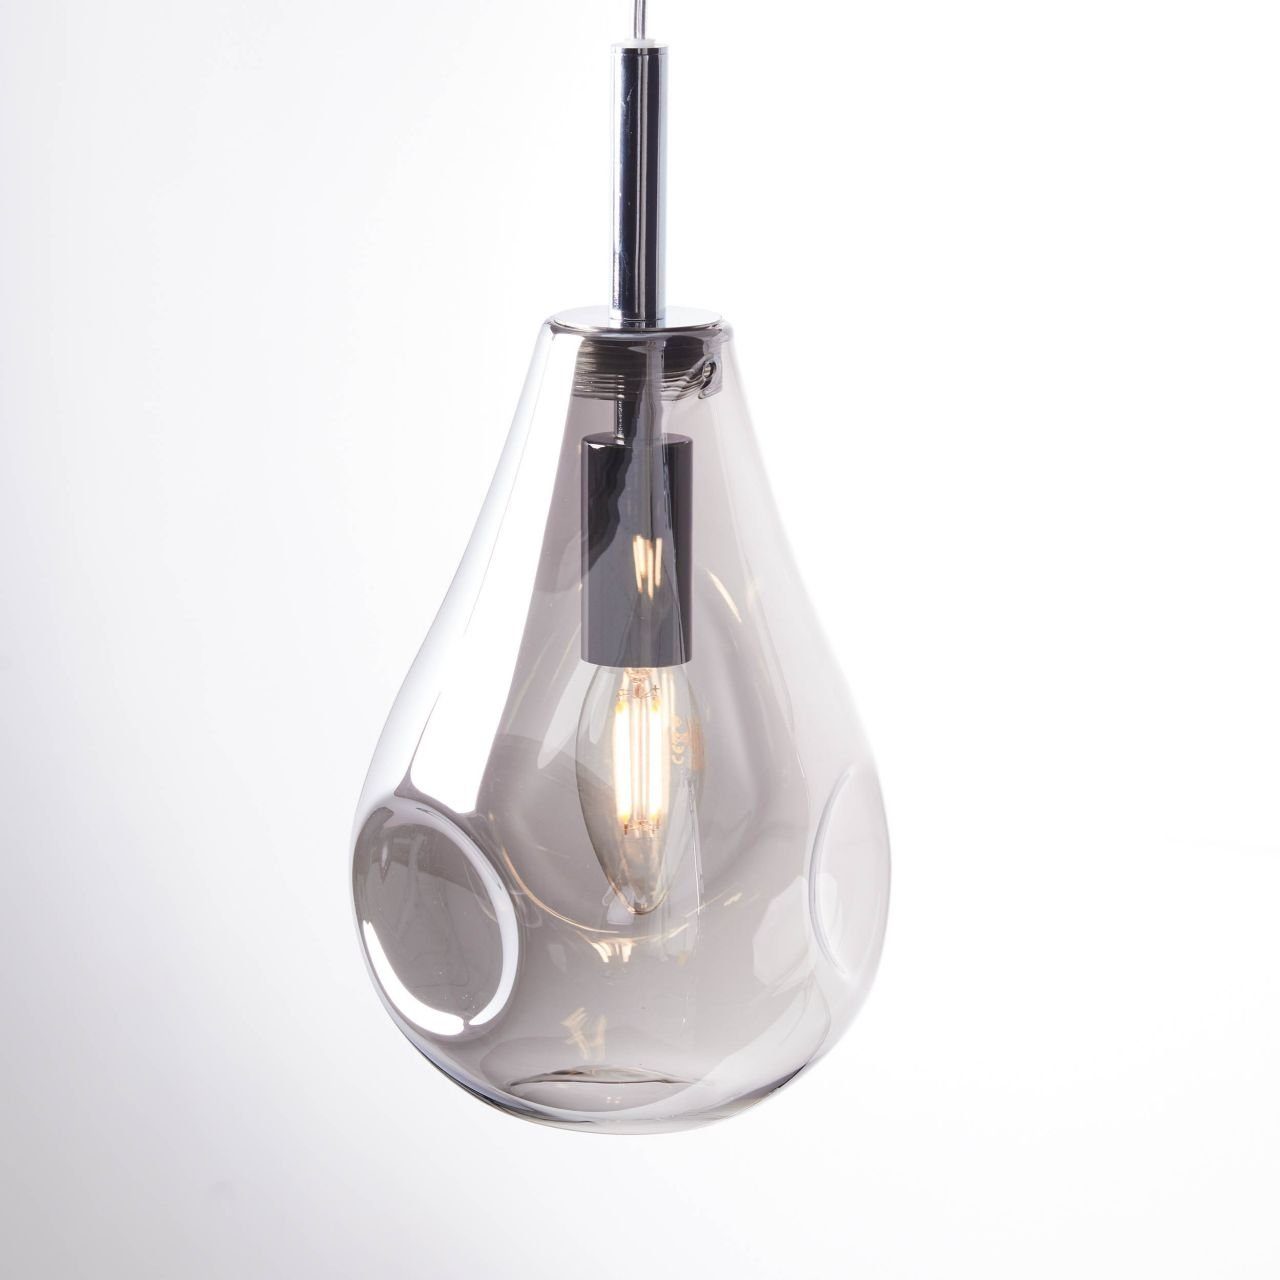 D45 Lampe, Drops, Brilliant rauchglas/chrom, Glas/Metall, Drops Pendelleuchte Pendelleuchte 1flg 1x